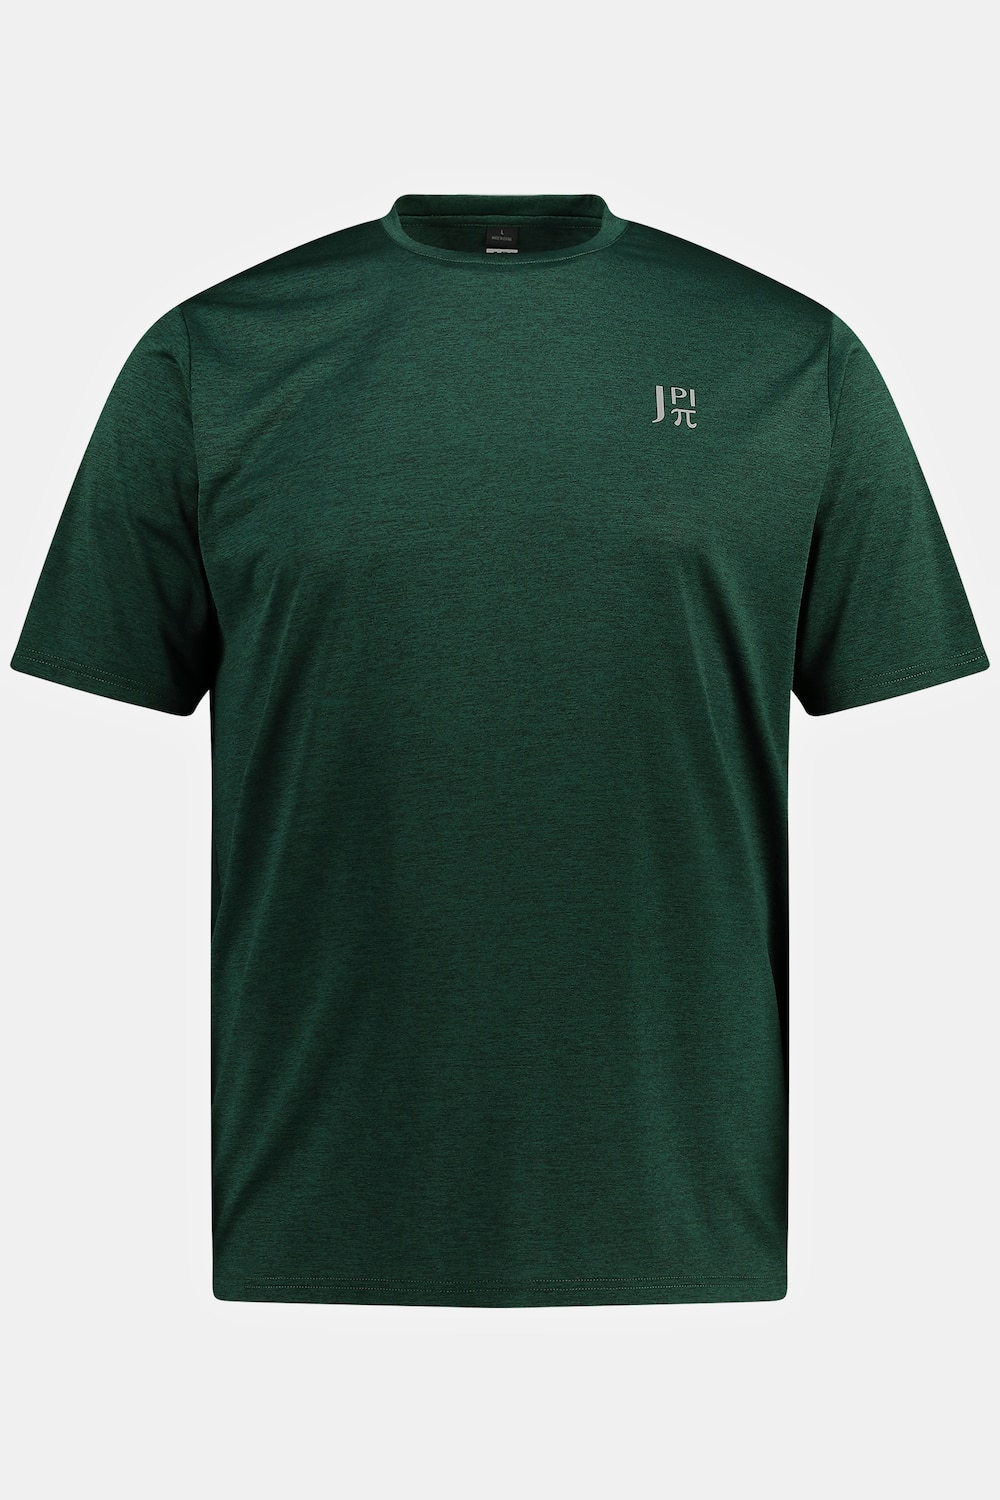 Grote Maten JAY-PI functioneel shirt FLEXNAMIC®male, groen, Maat: XXL, Polyester, JAY-PI